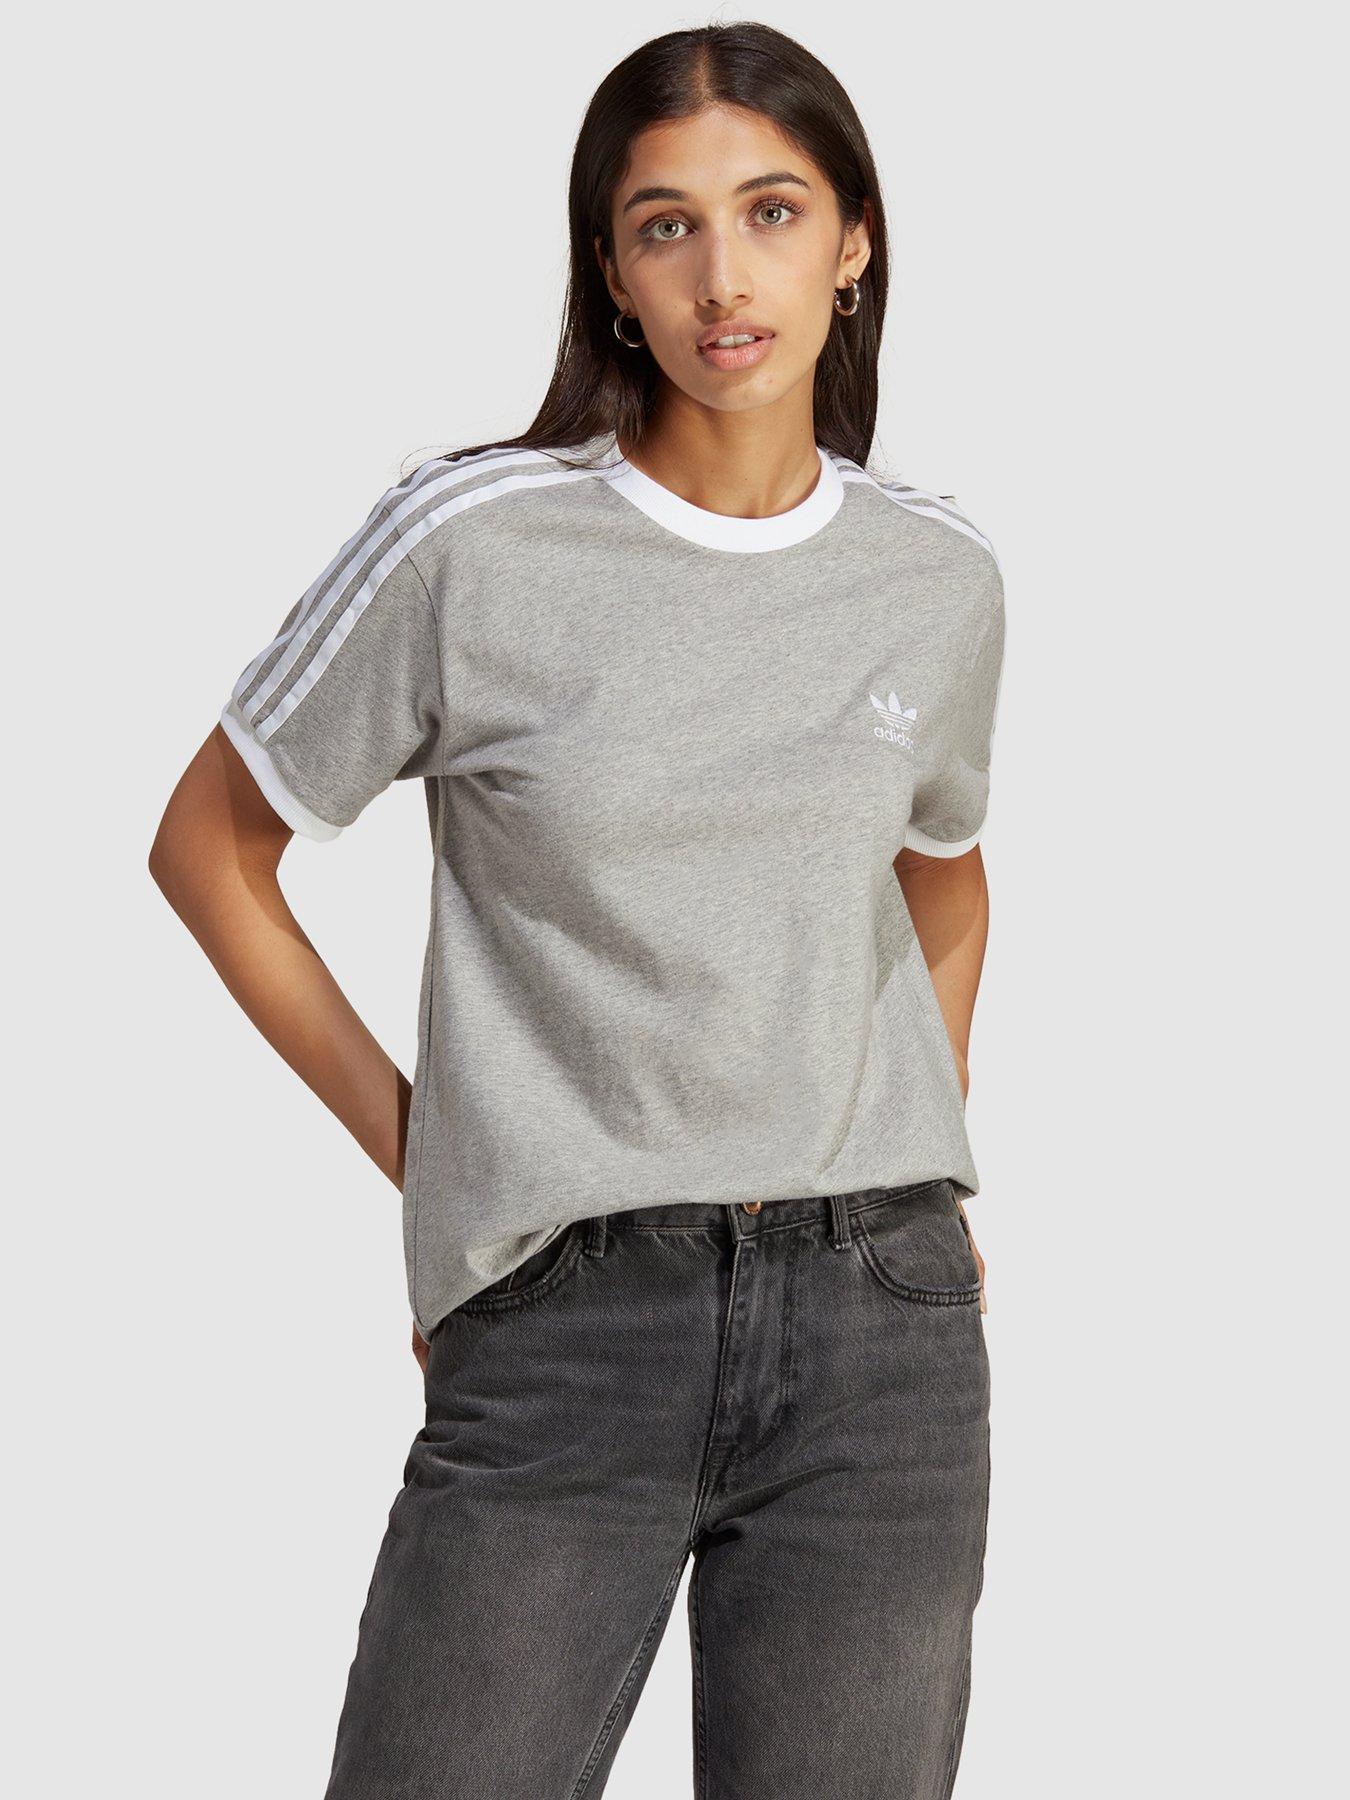 Adidas originals Tops & t-shirts | Women | Very Ireland